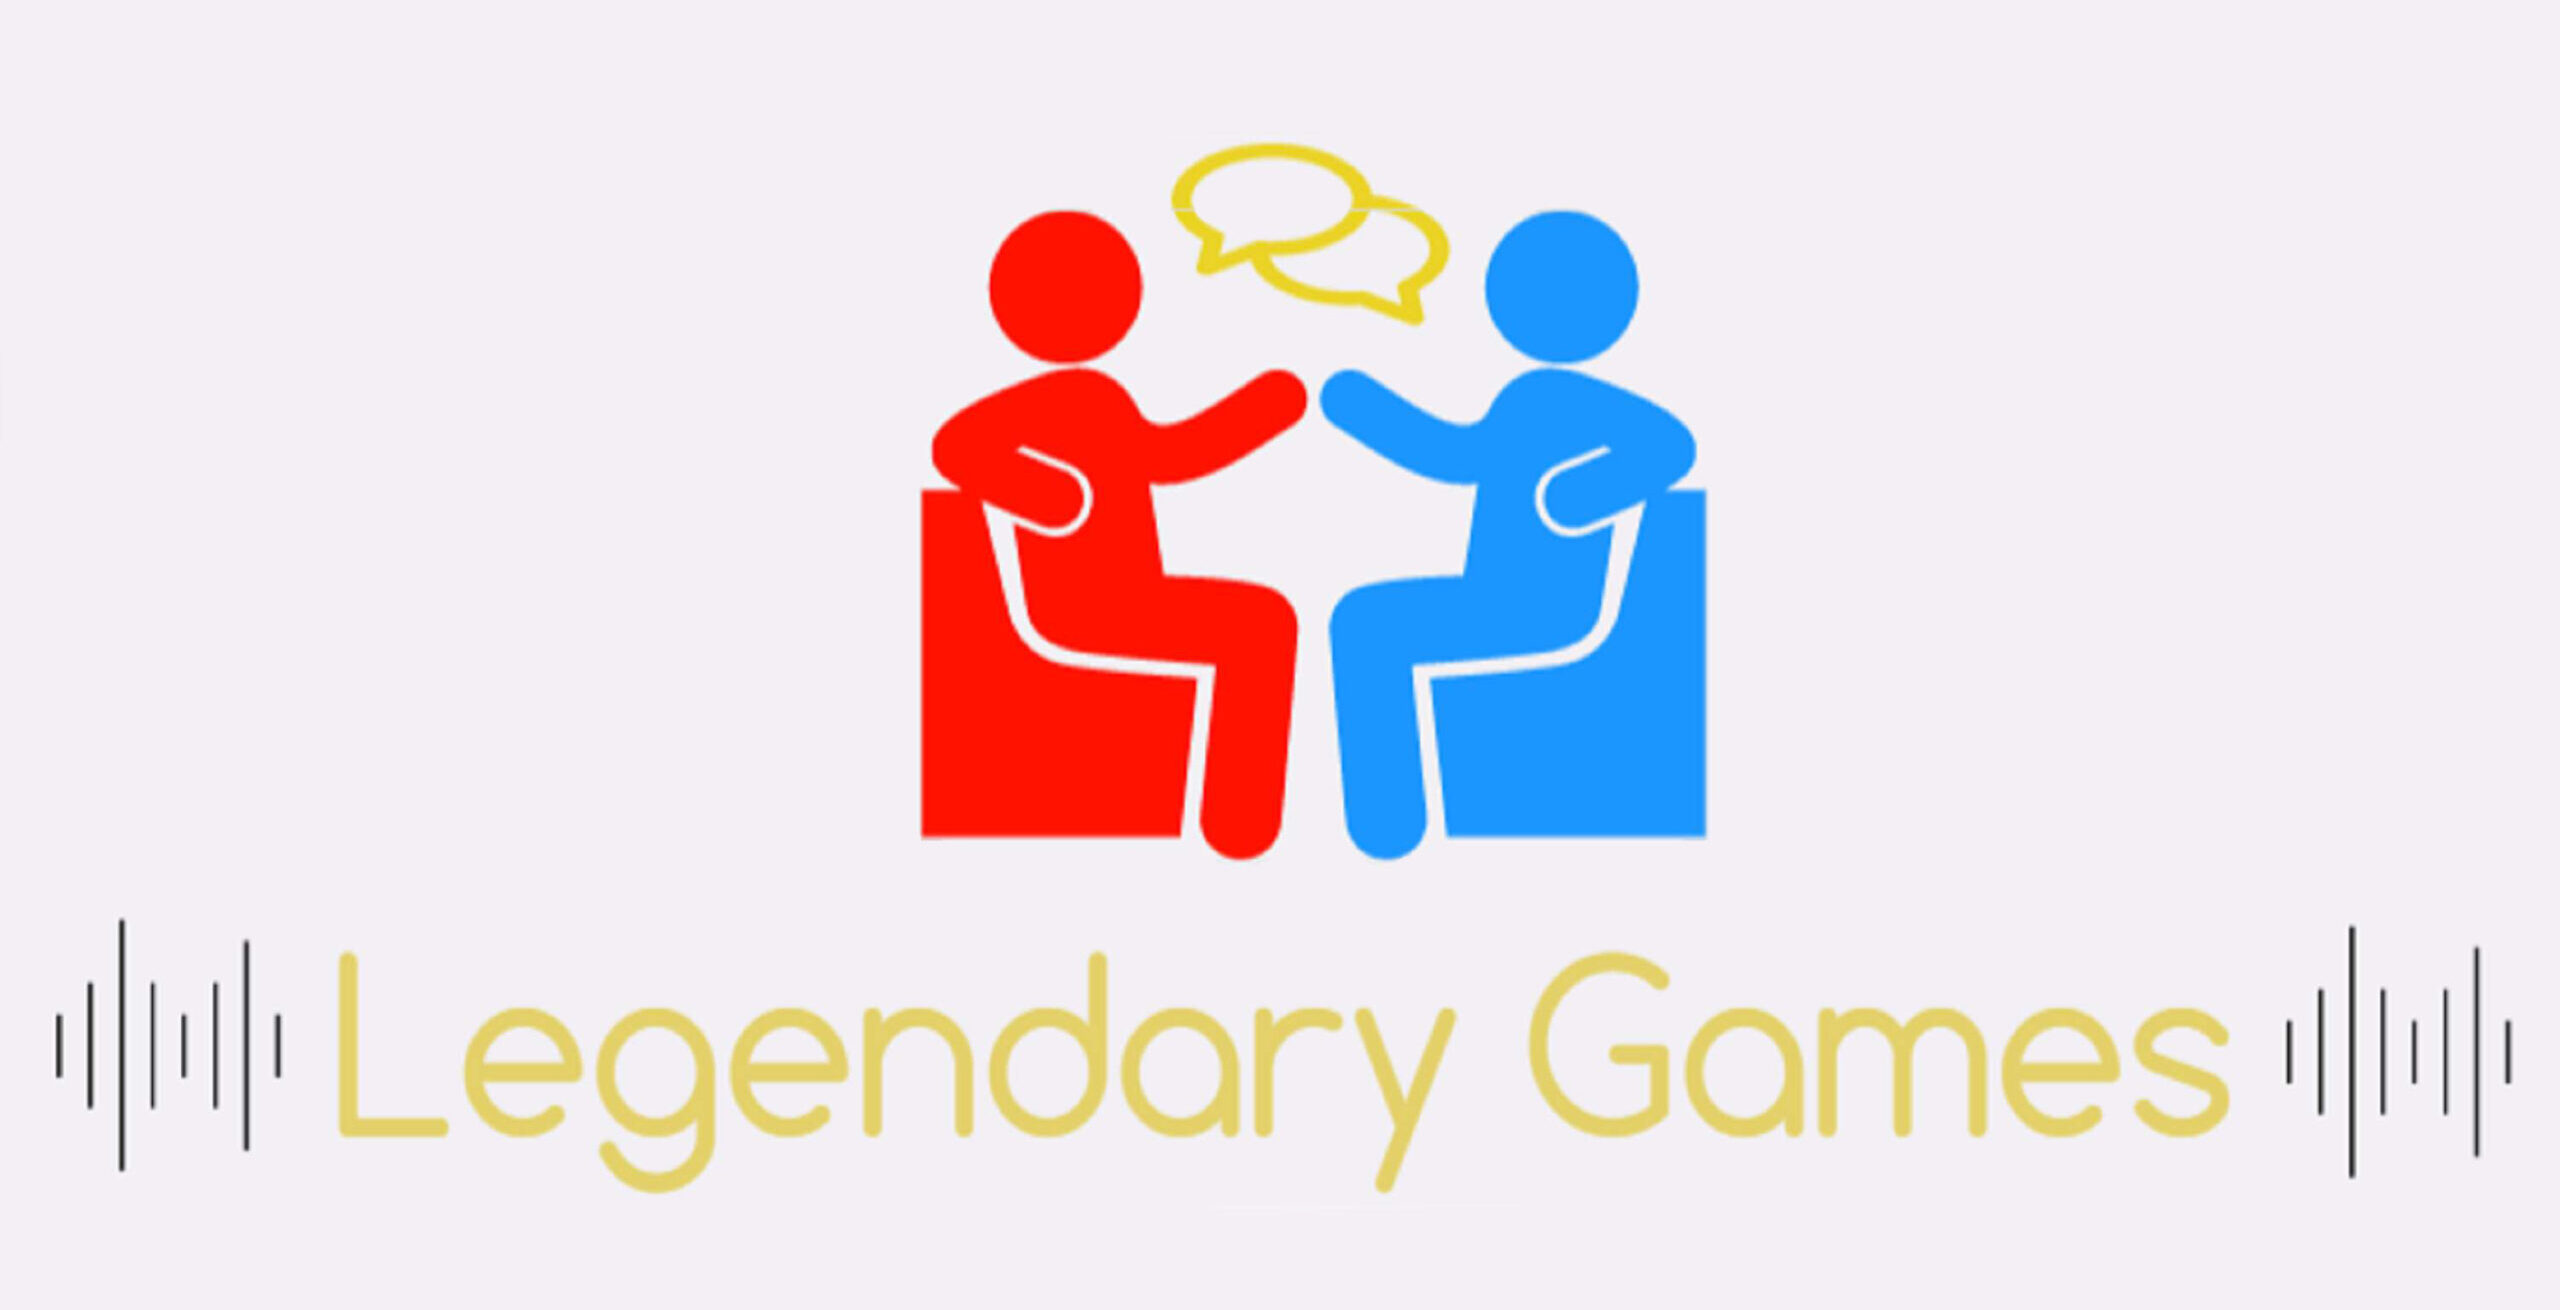 Legendary Games Podcast